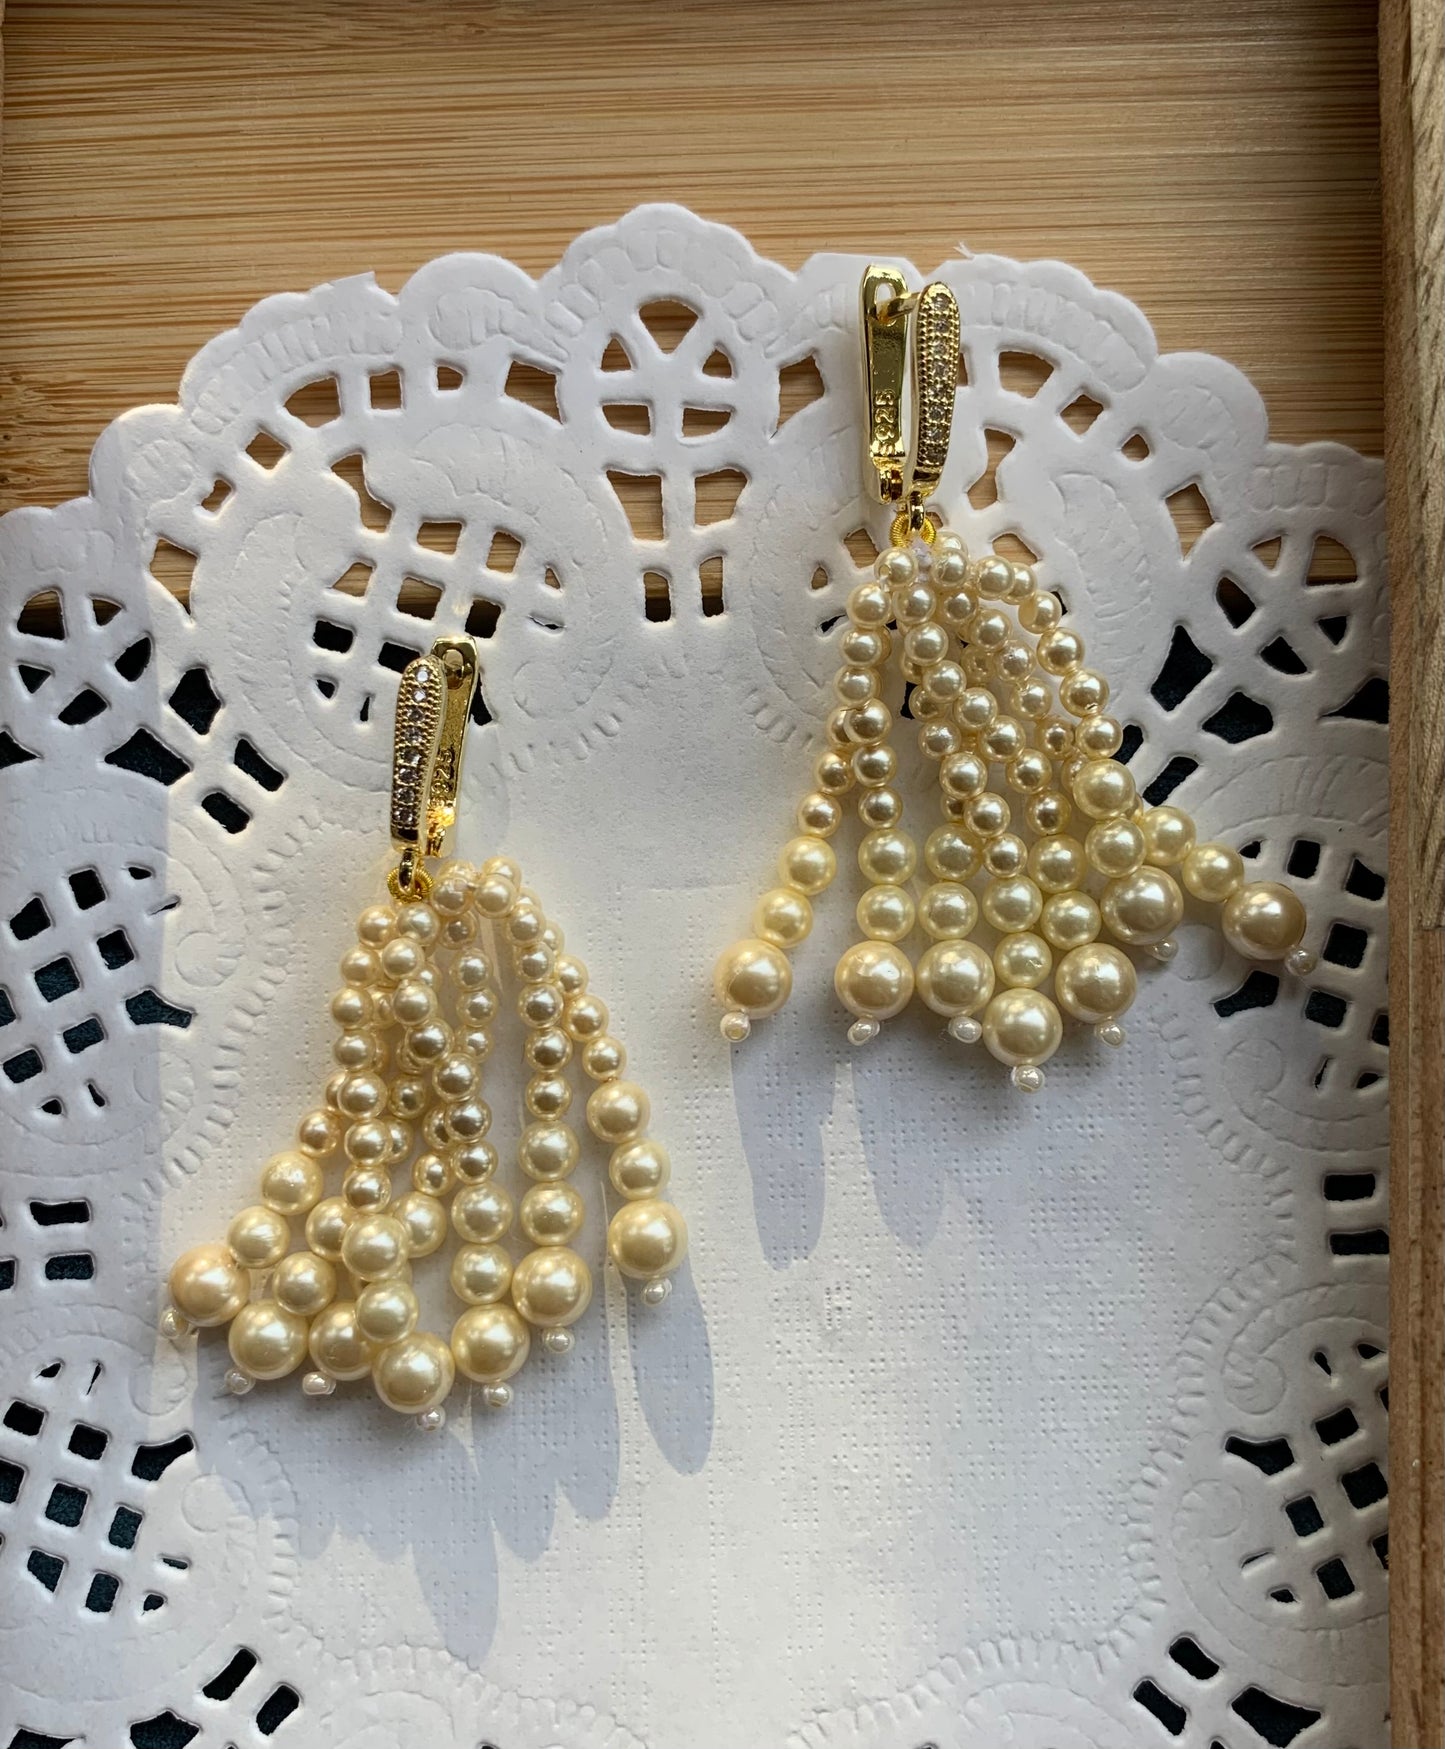 Pearl Tassel Earrings